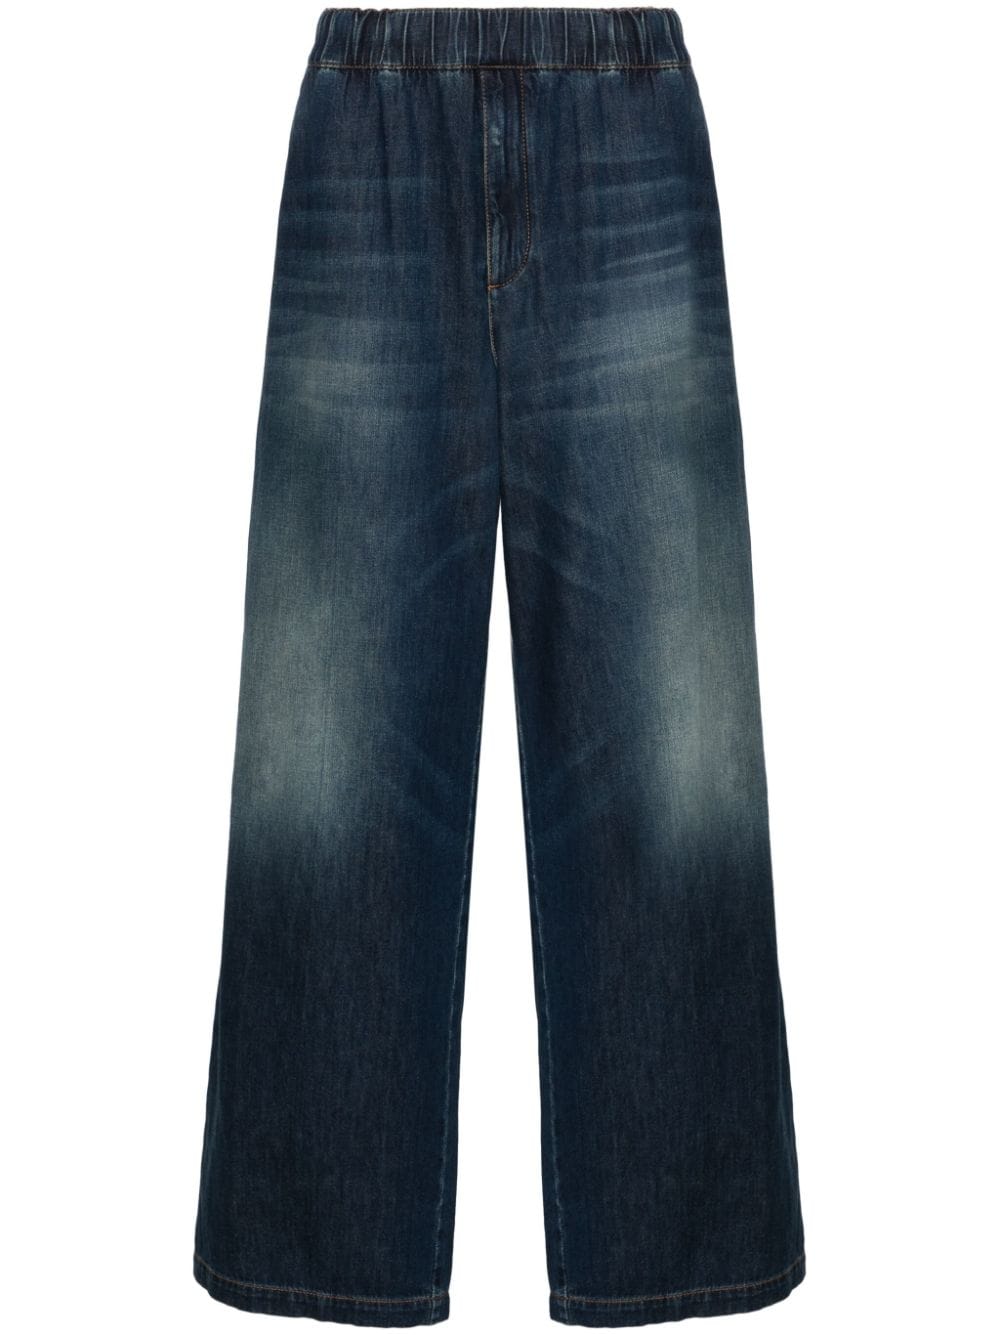 Denim faded effect jeans